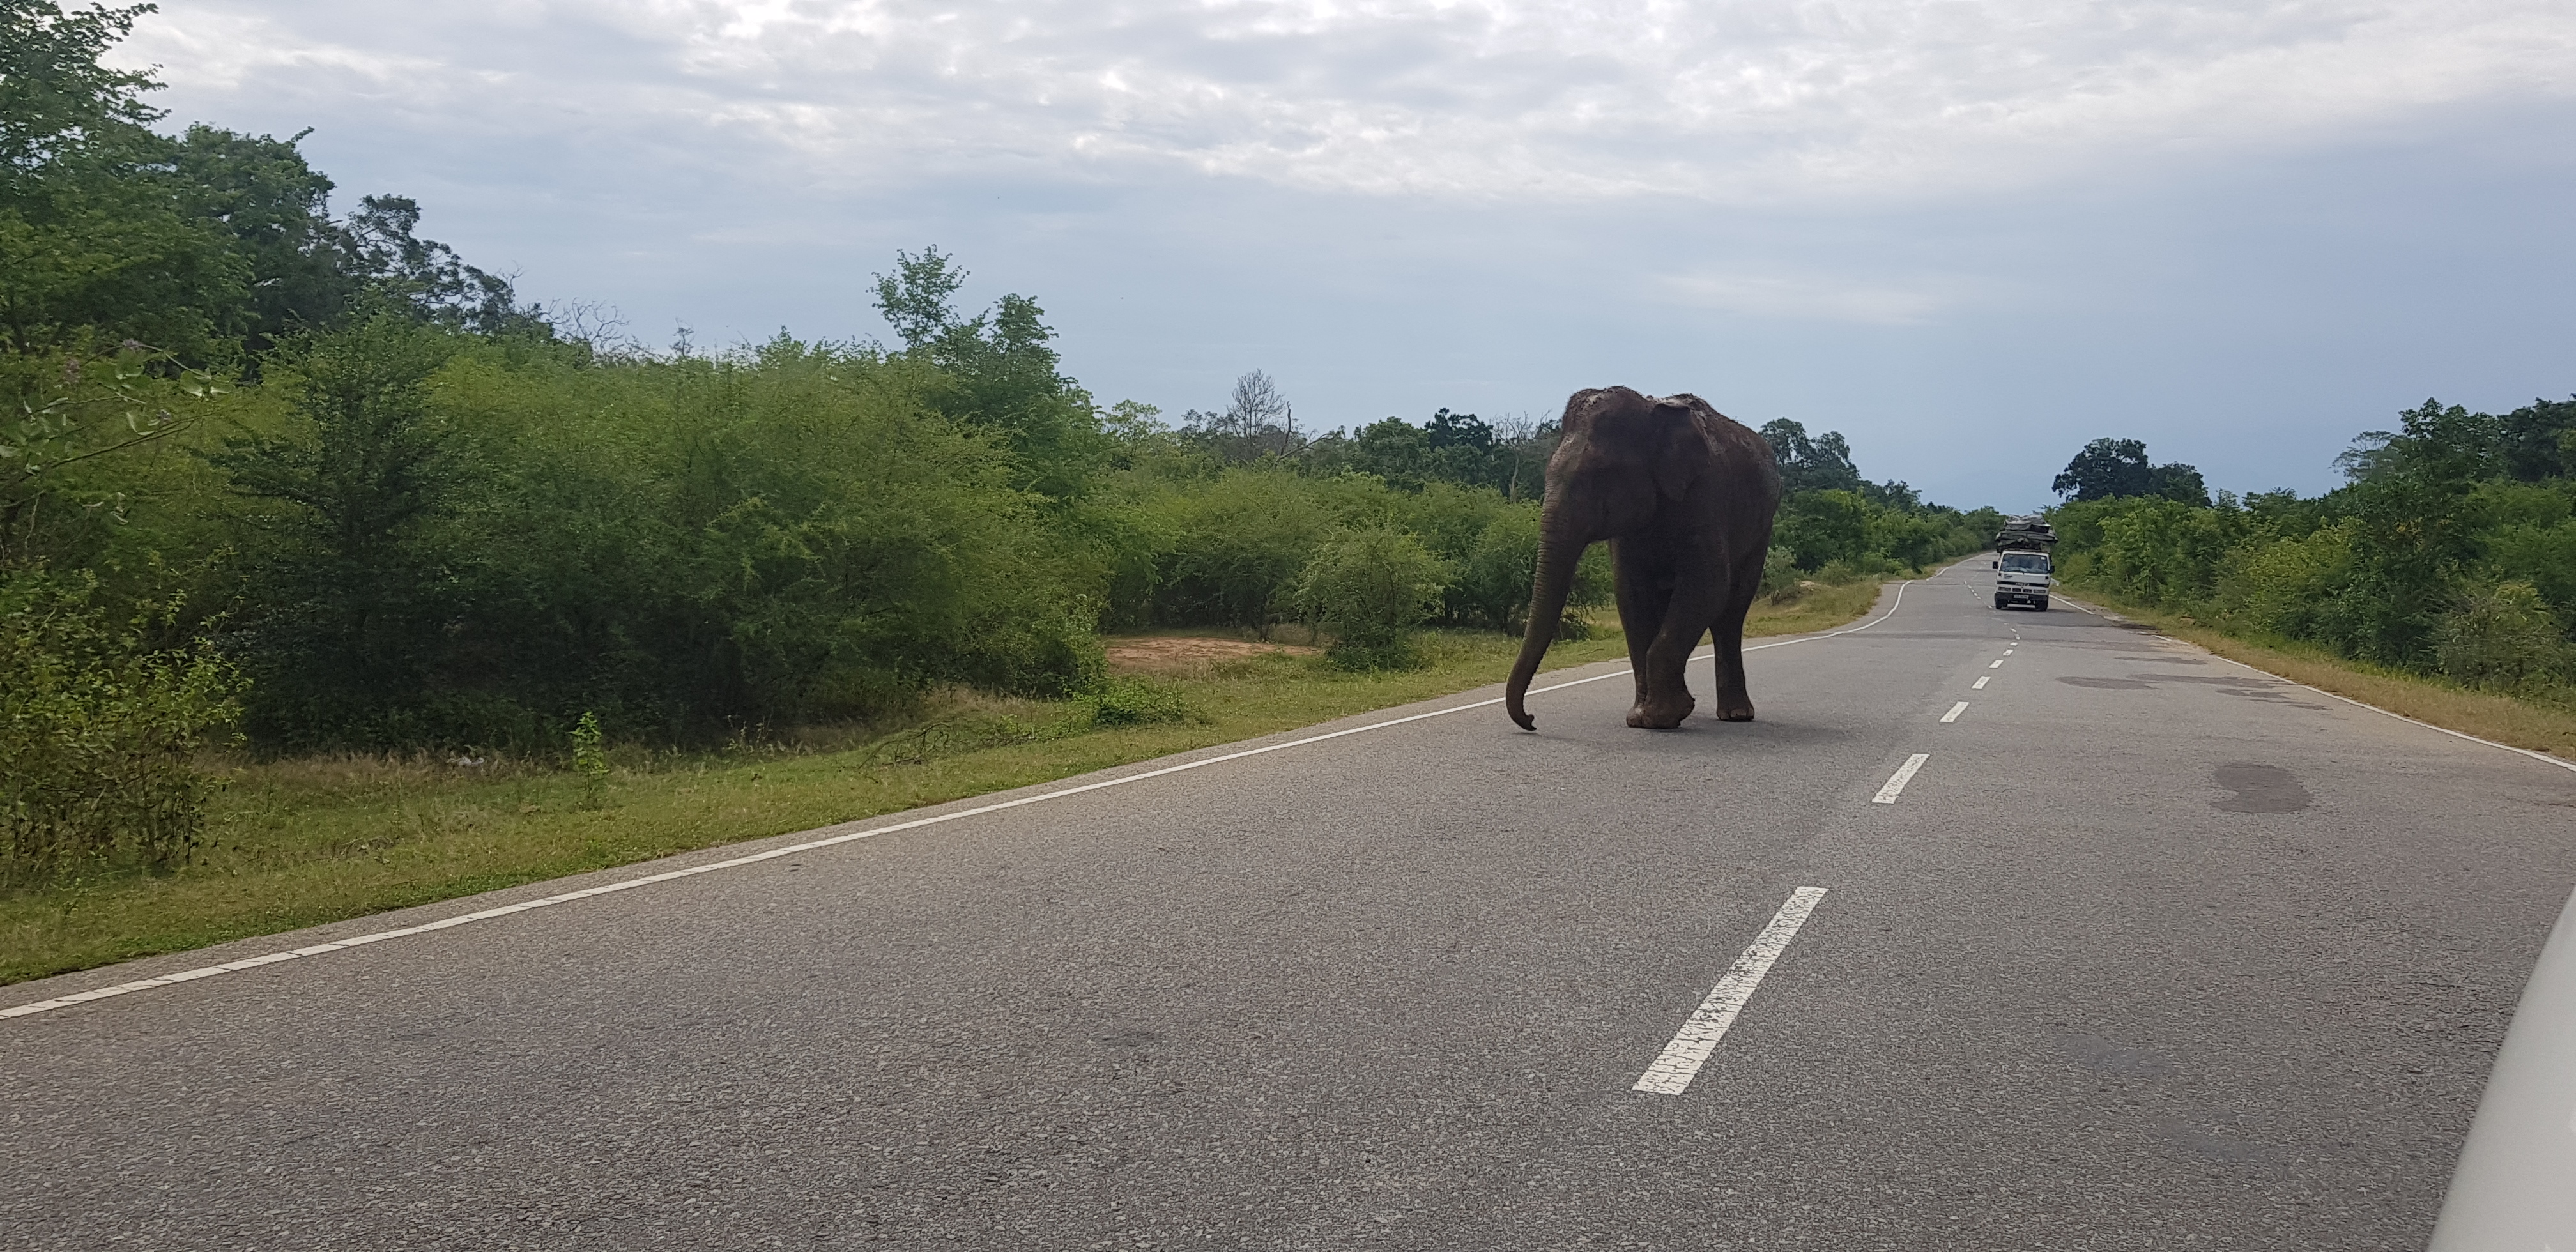 A giant takes a stroll down the main road dividing the Yala and Lunugamvehera National Parks - July 2020. Image credit: Nadim Majeed.